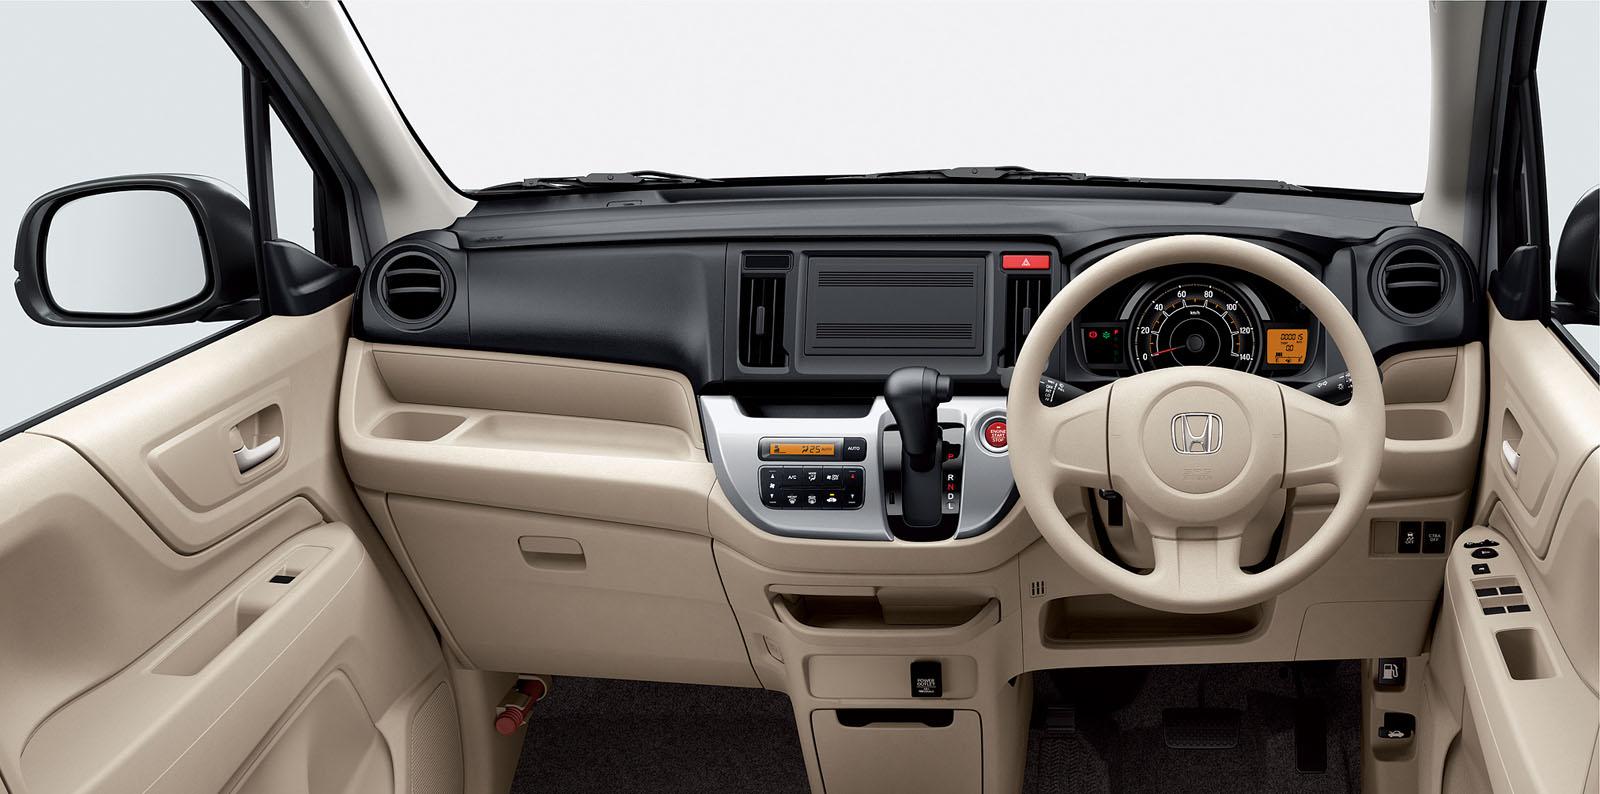 Honda N-WGN interior